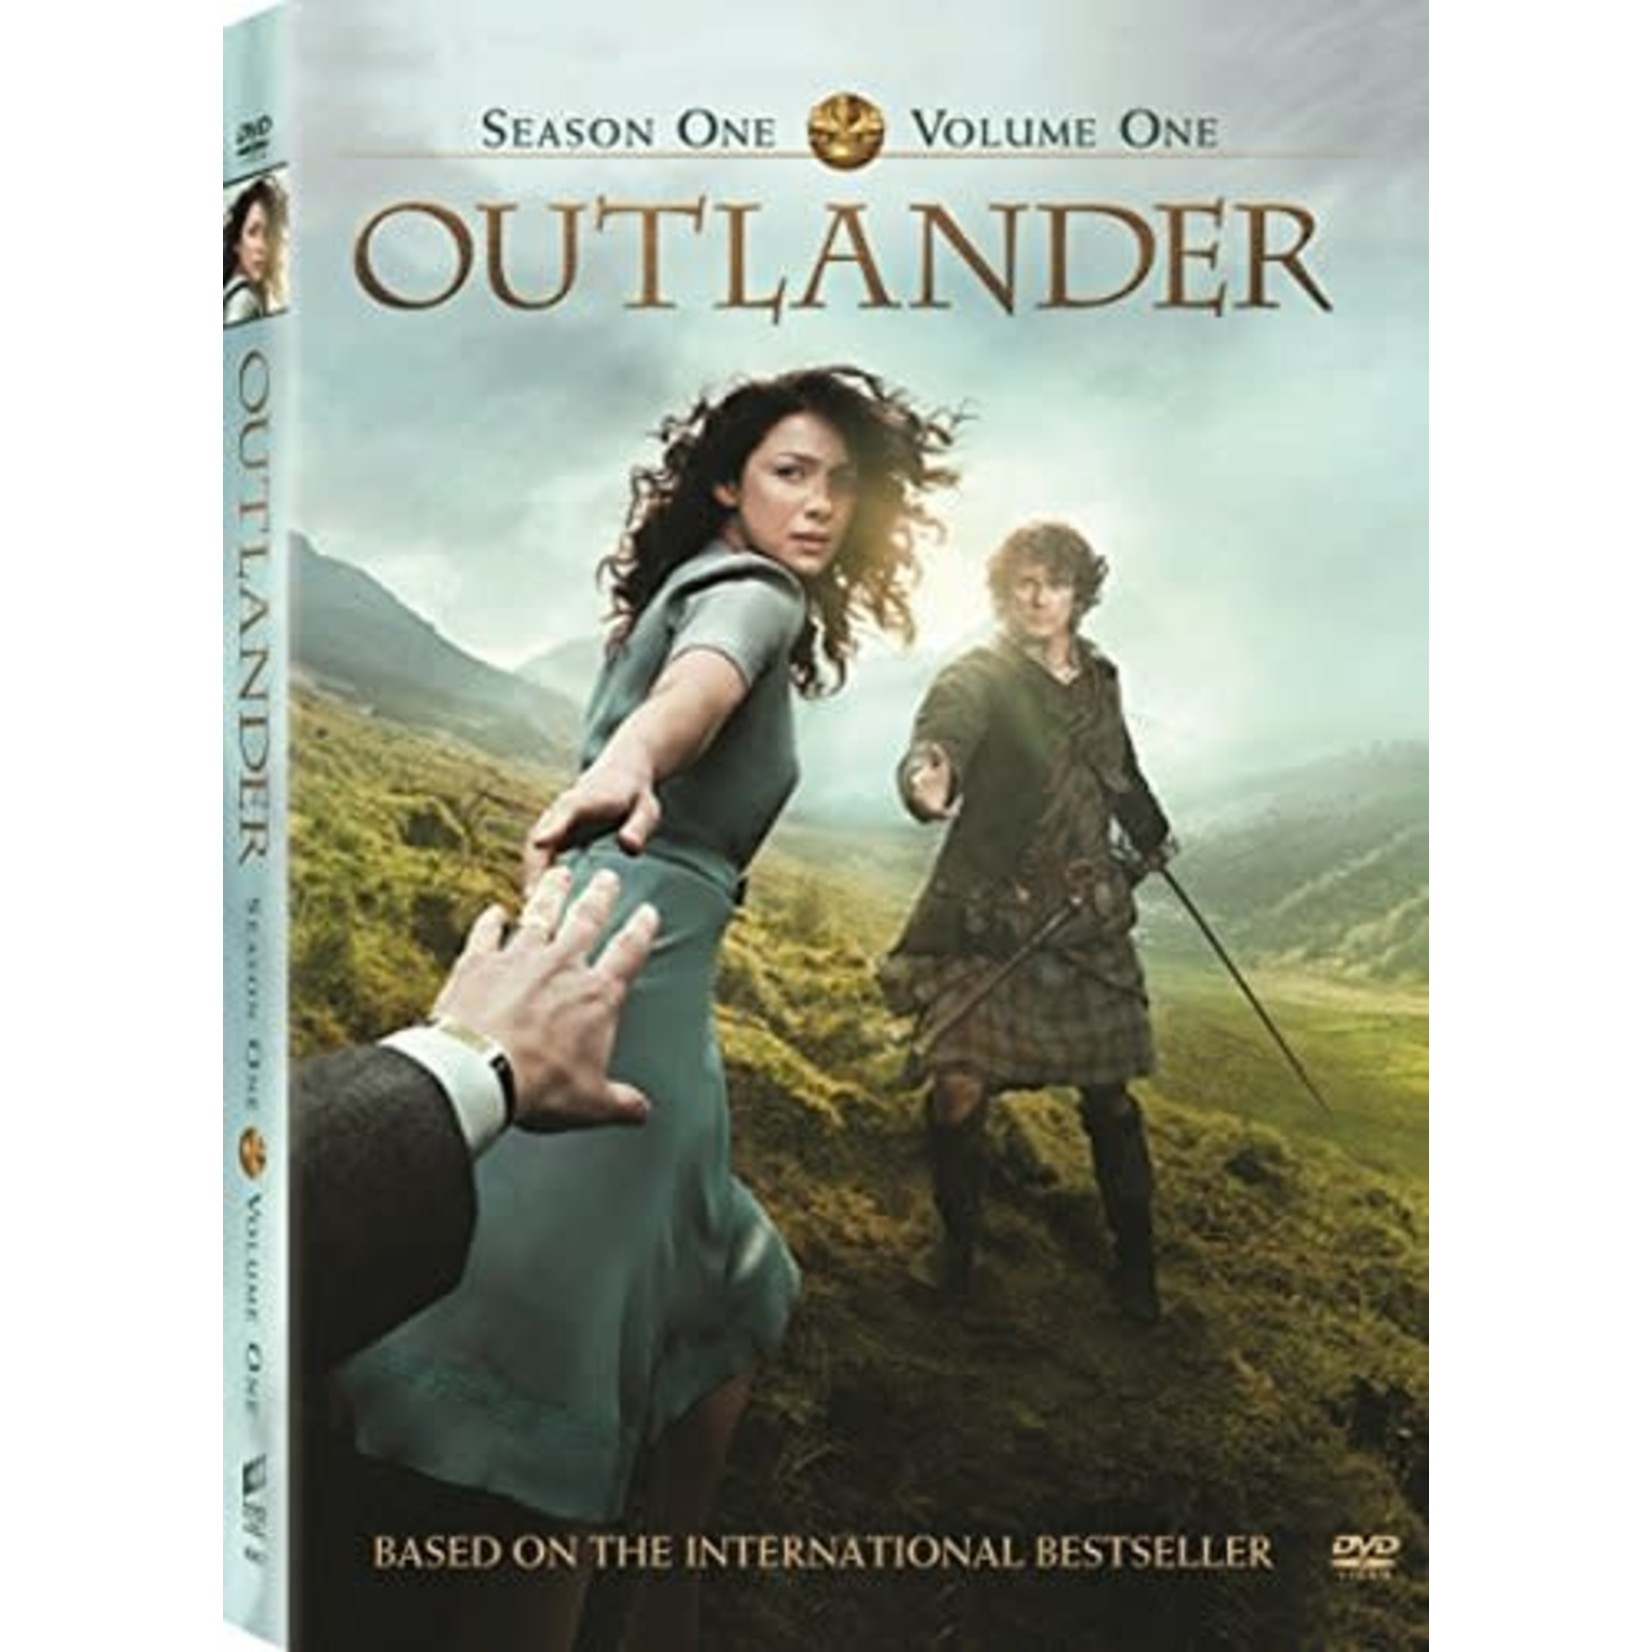 Outlander - Season 1 Vol. 1 [USED DVD]